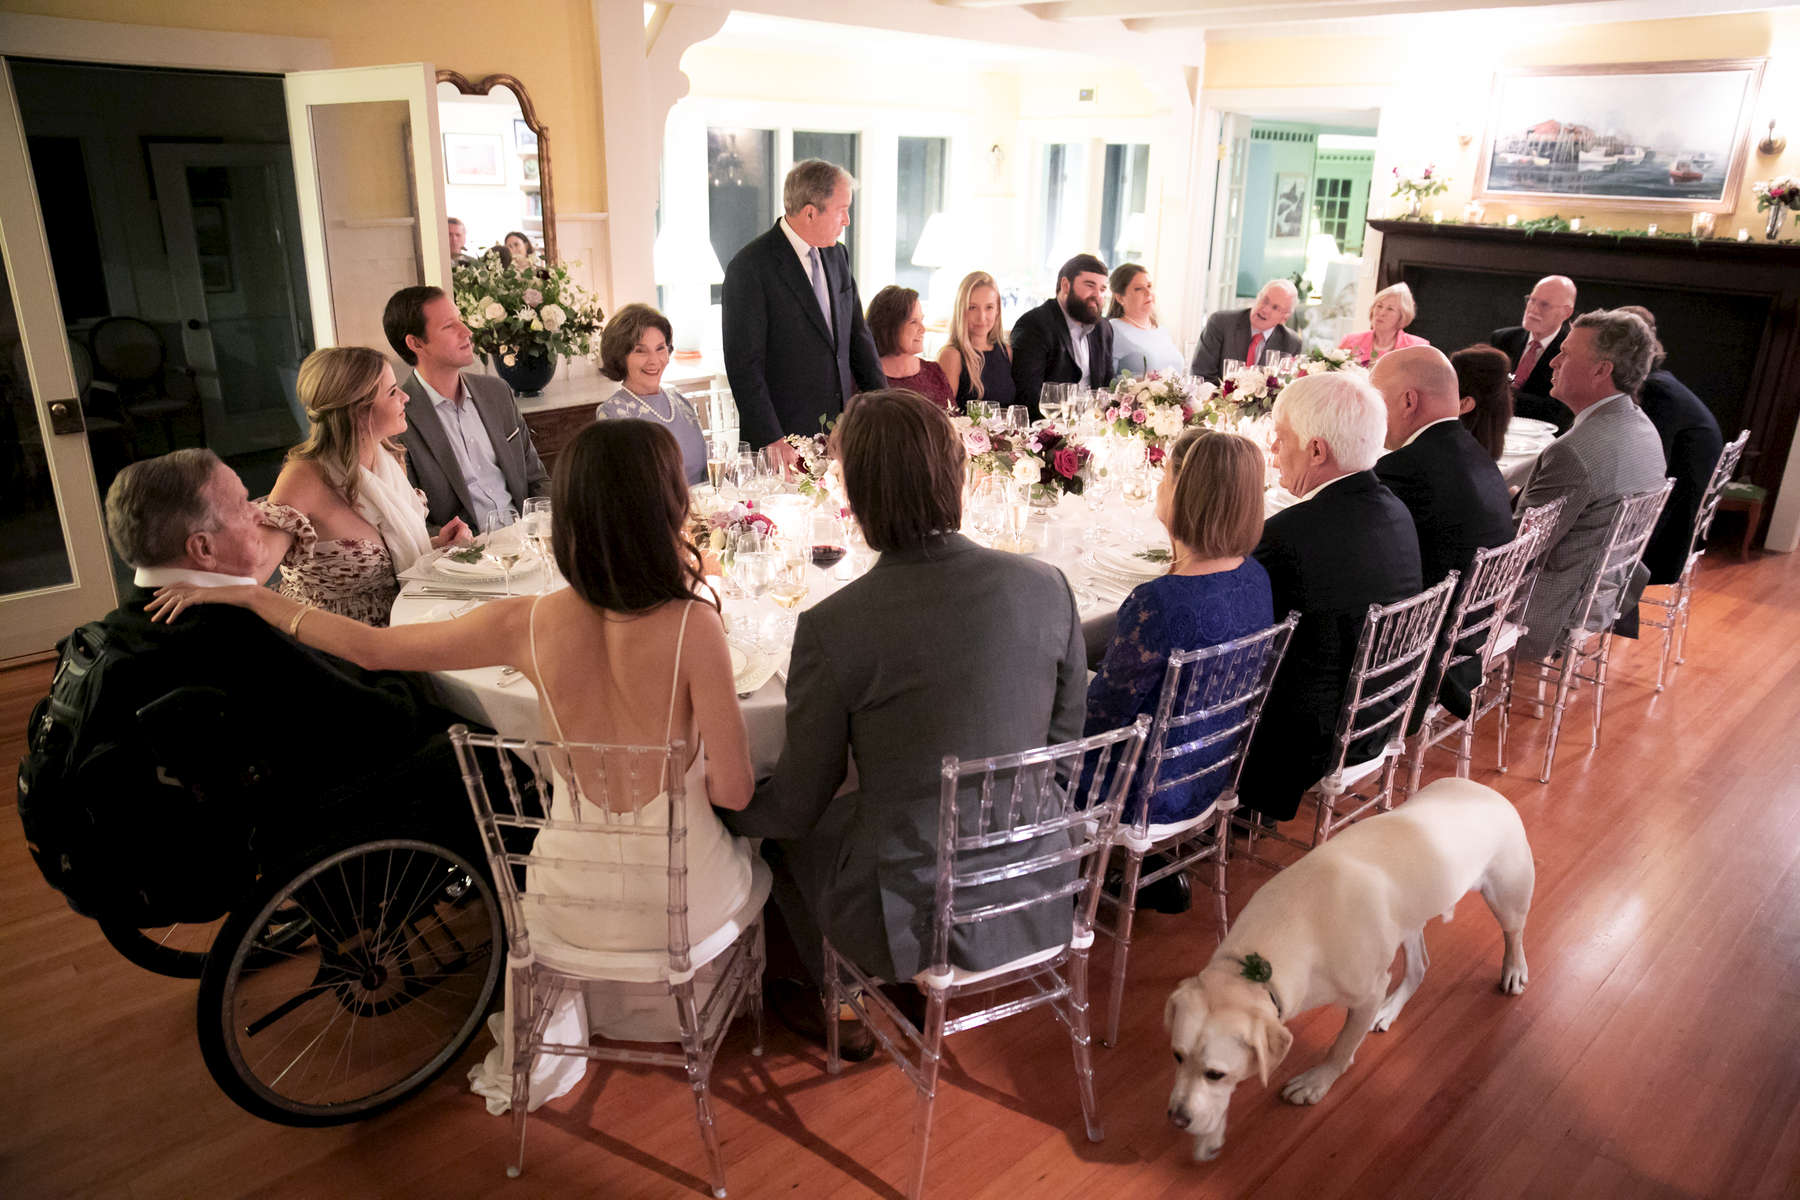 Barbara Bush and Craig Coyne wedding on October 7, 2018. Photo by Paul Morse